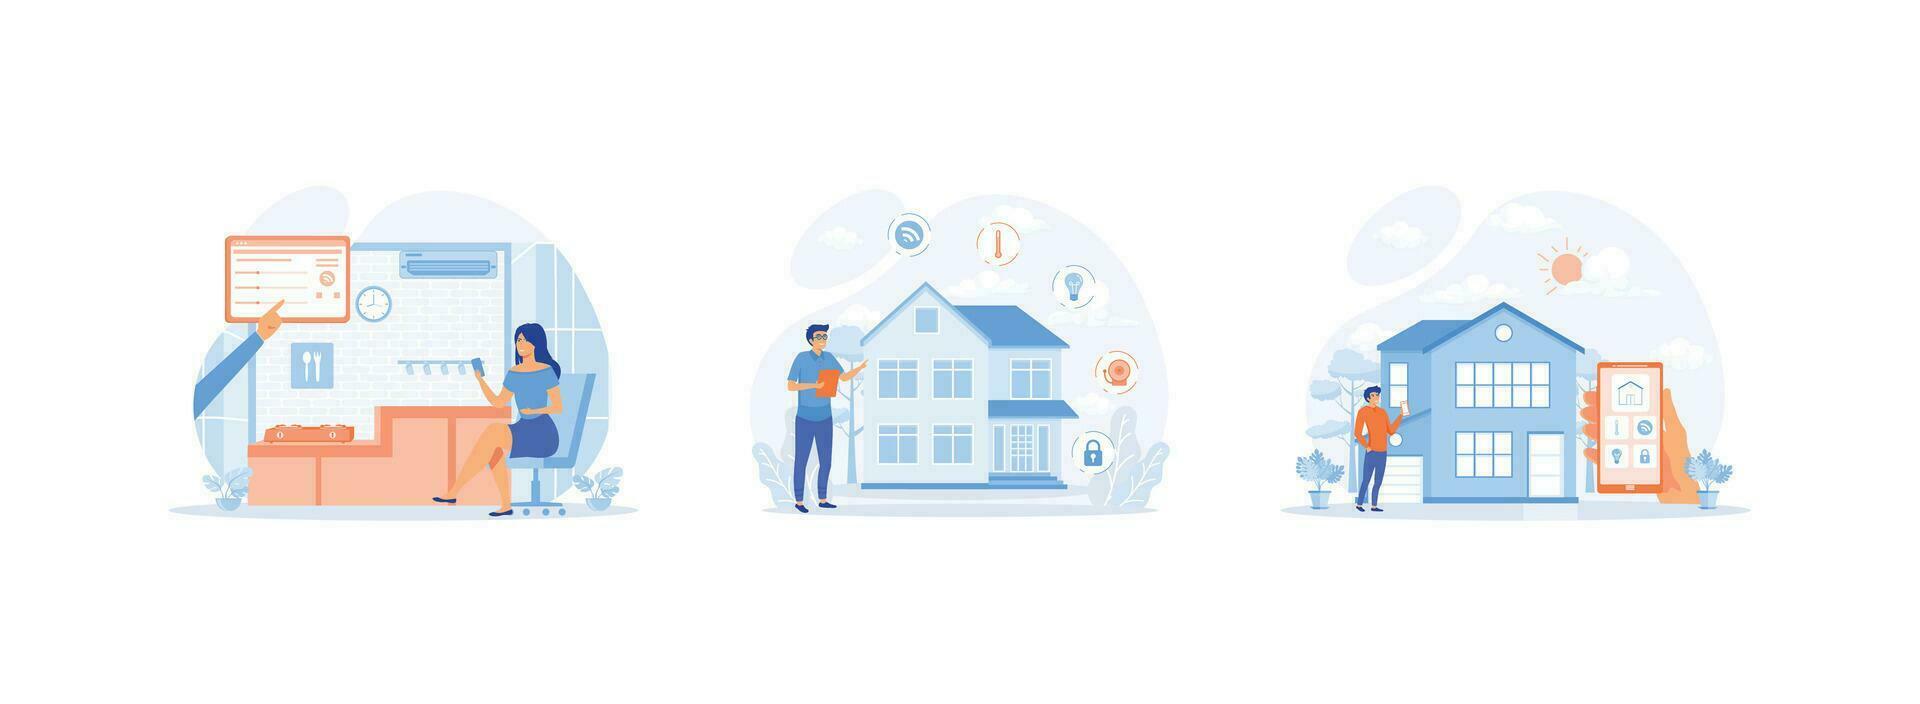 controlling house digital system on tablet app, home with cognitive intelligence, Smart home app with control system. Smart home 1 set flat vector modern illustration